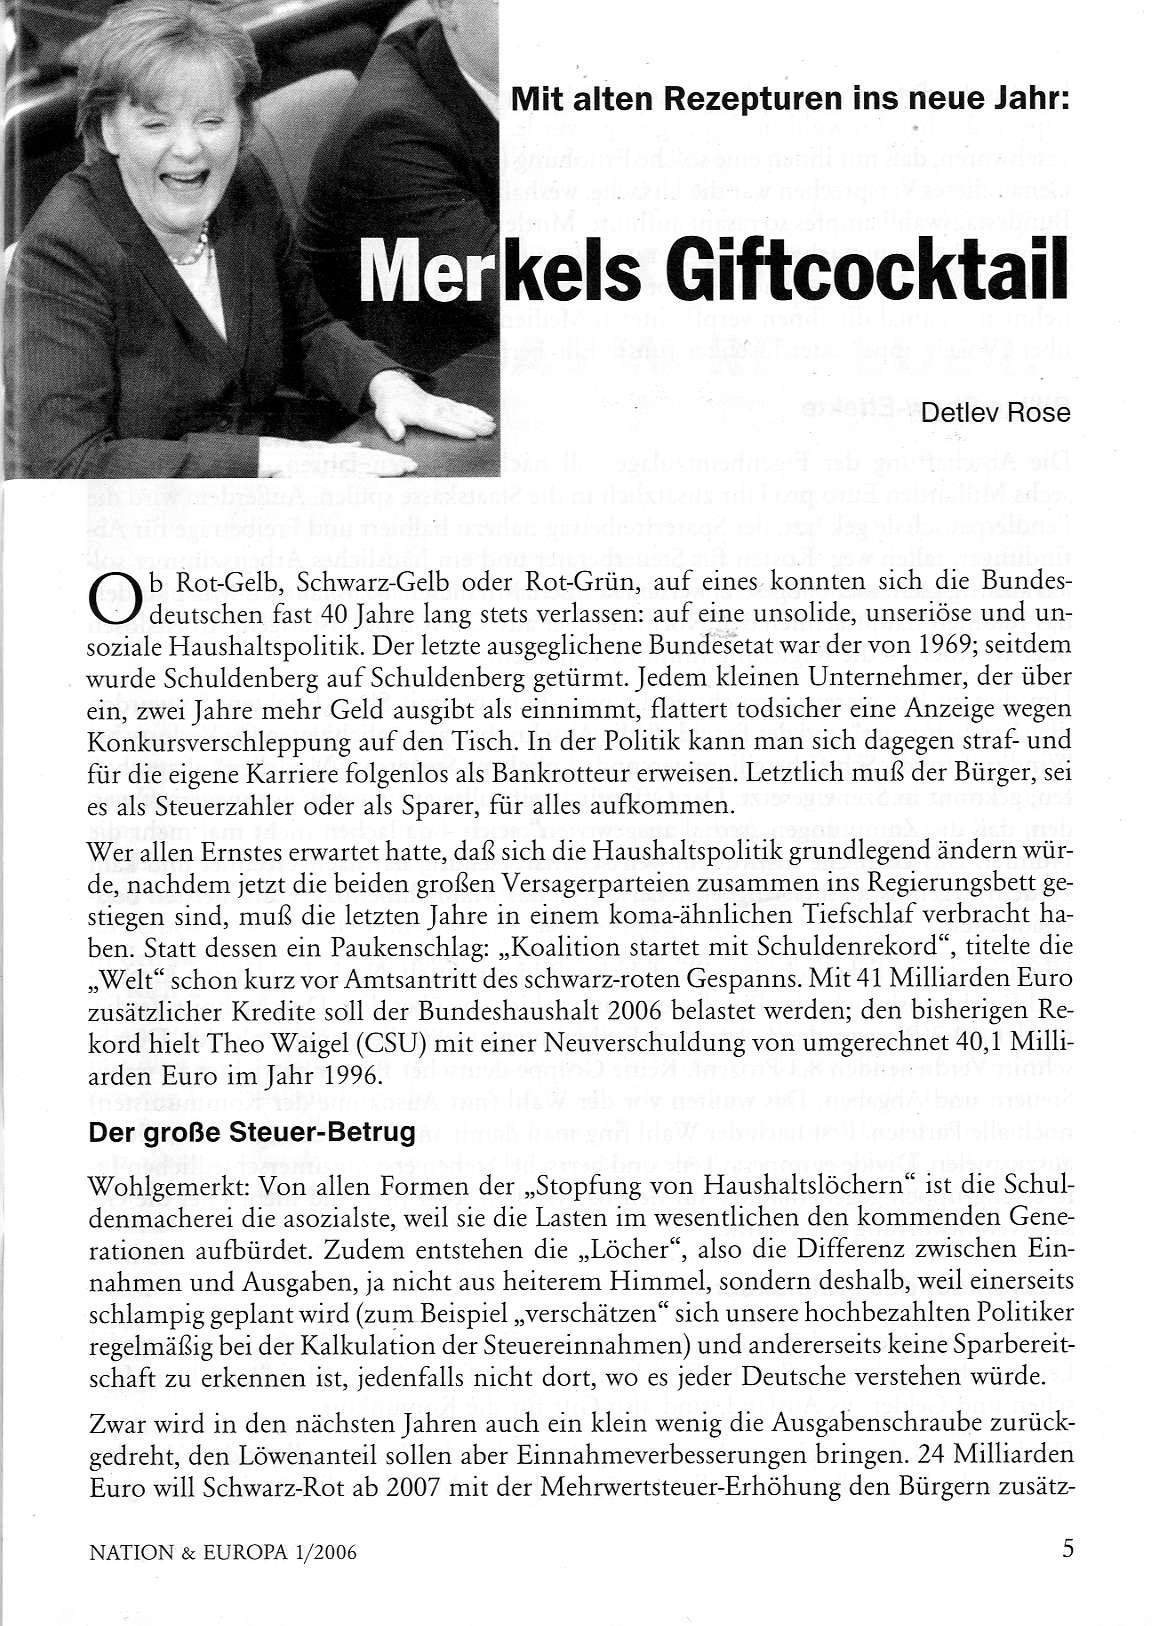 Merkels-Giftcocktail-05